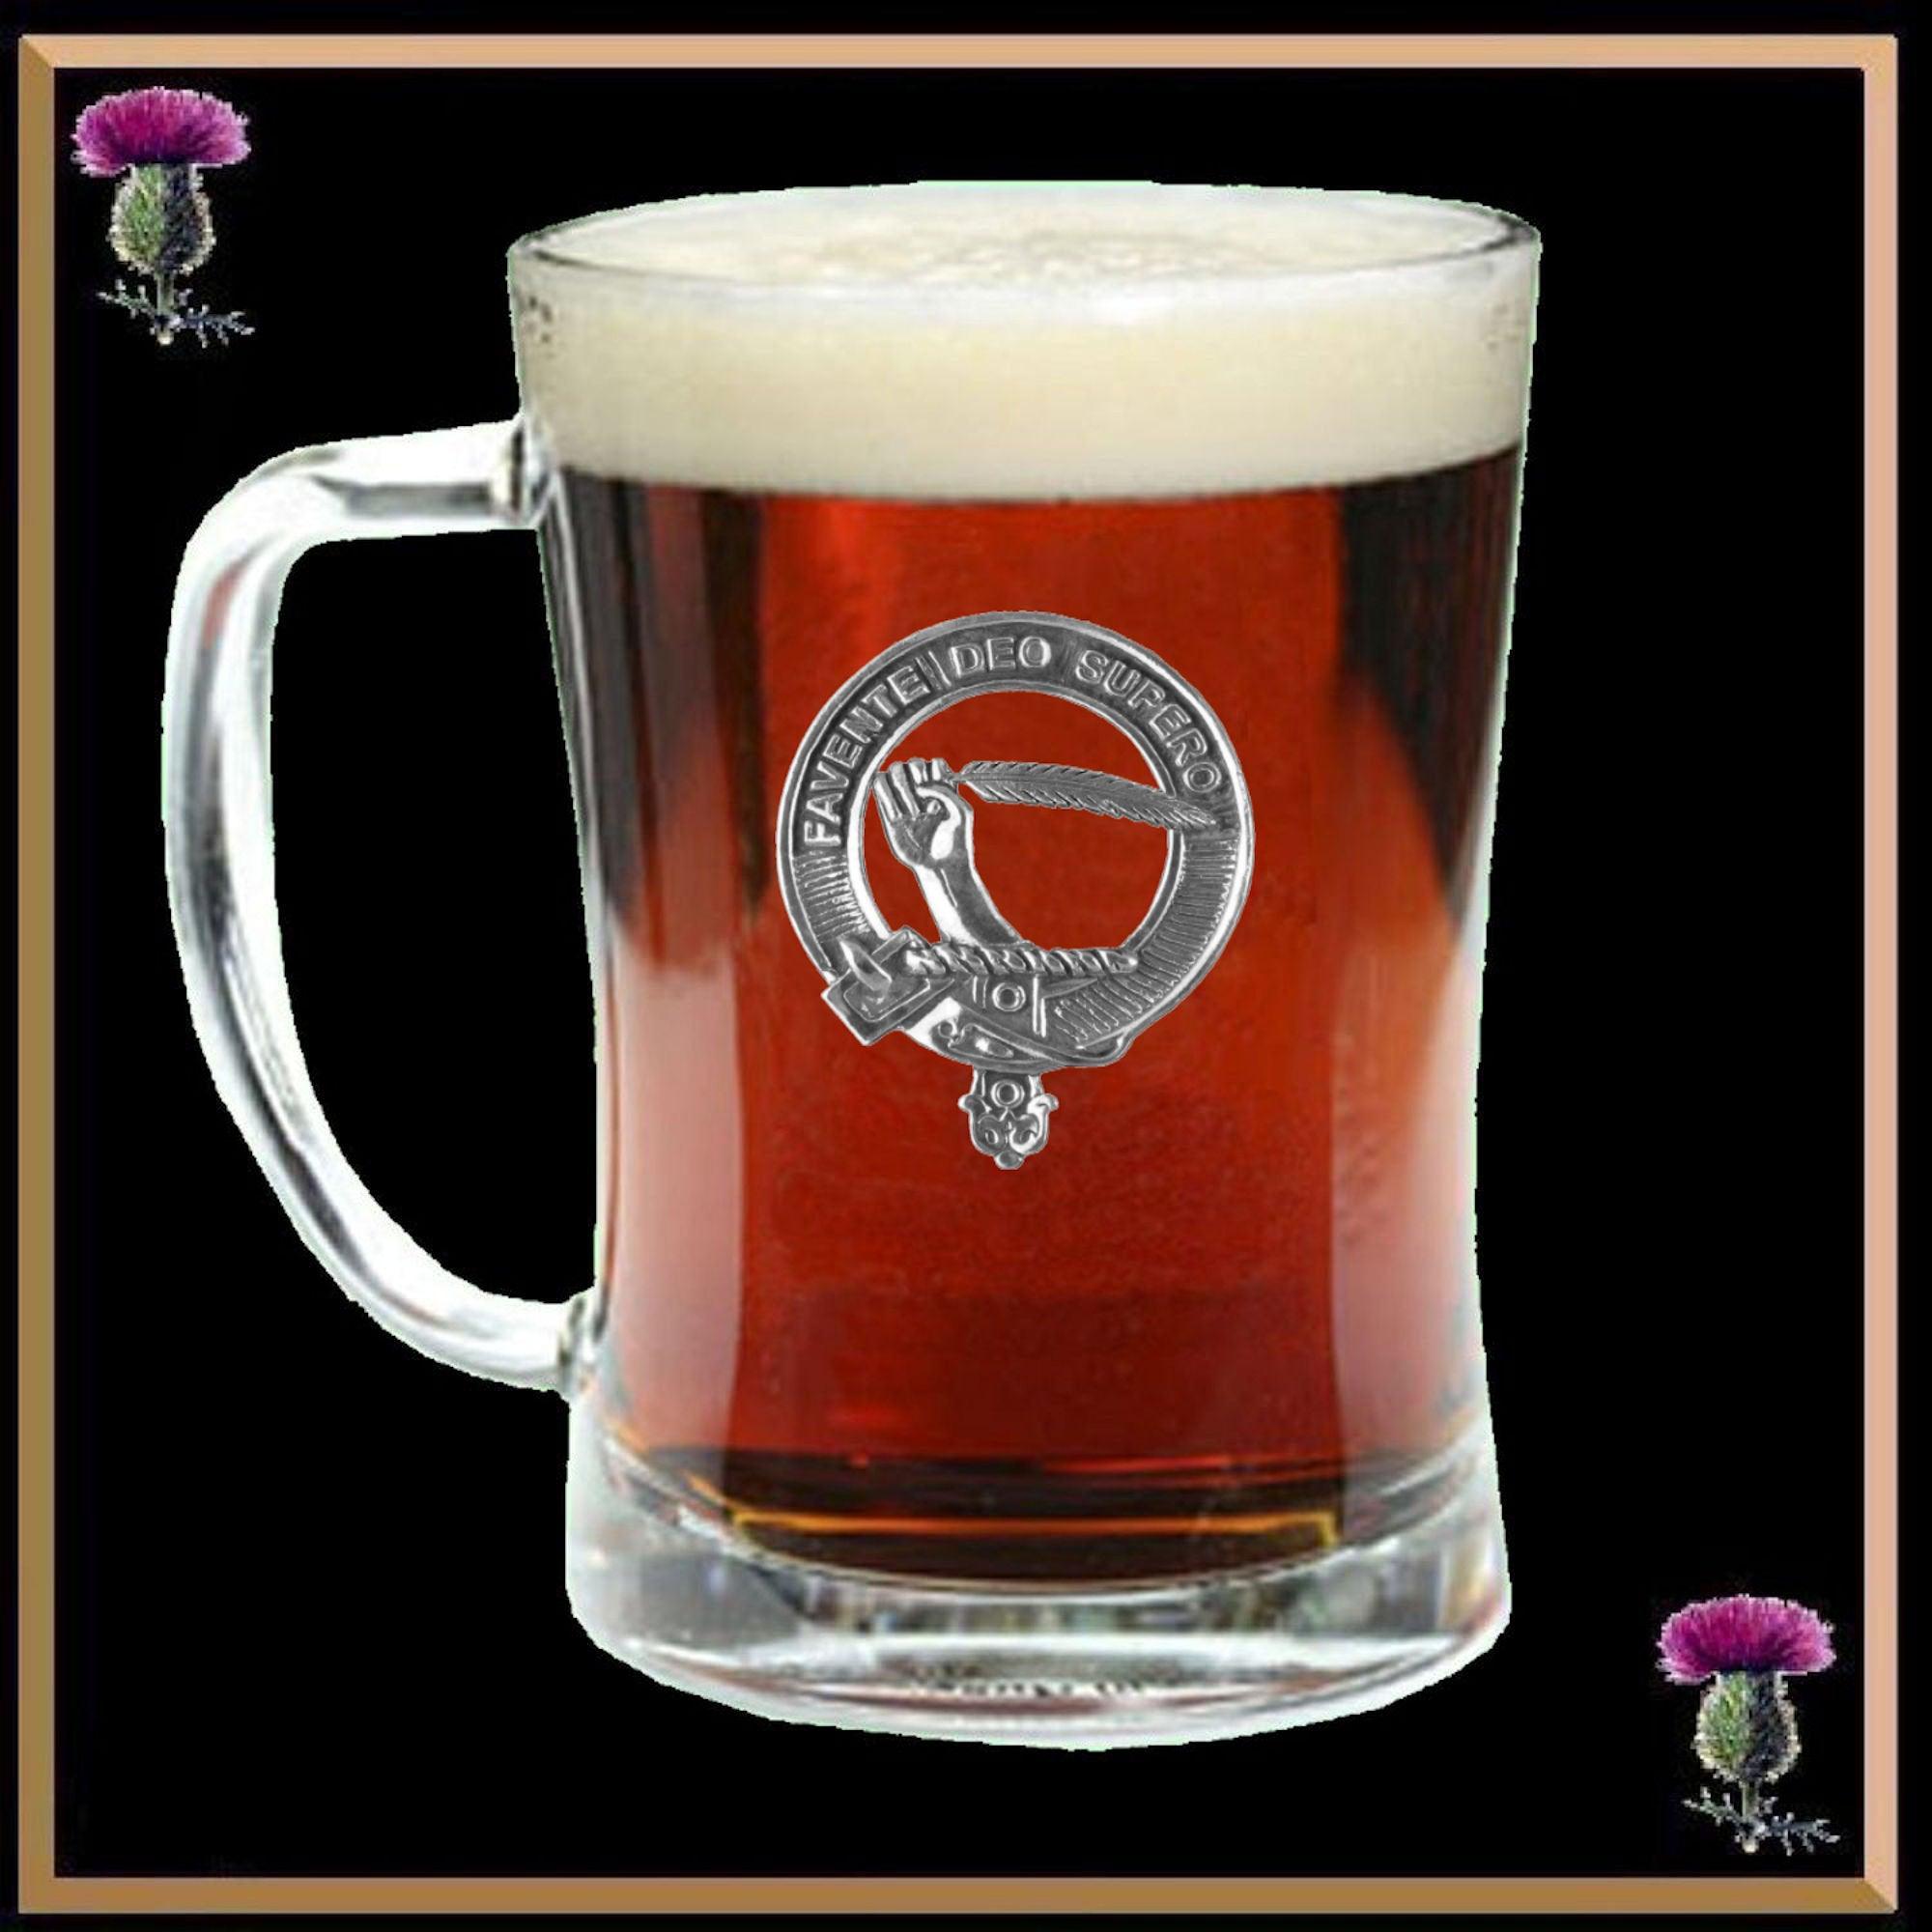 Mitchell Clan Crest Badge Glass Beer Mug